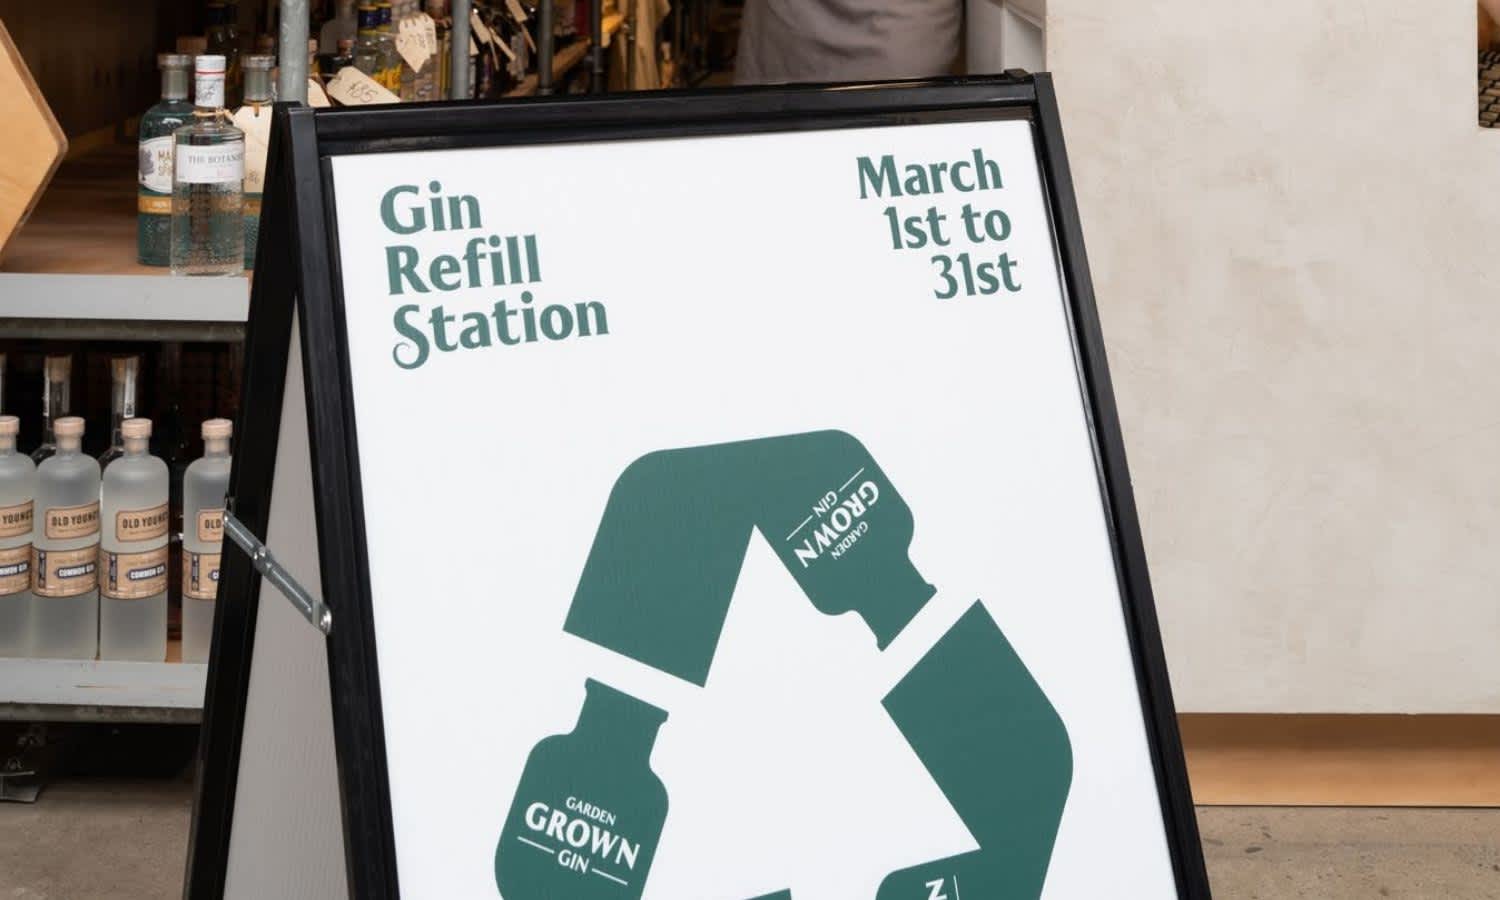 Gin refilling station